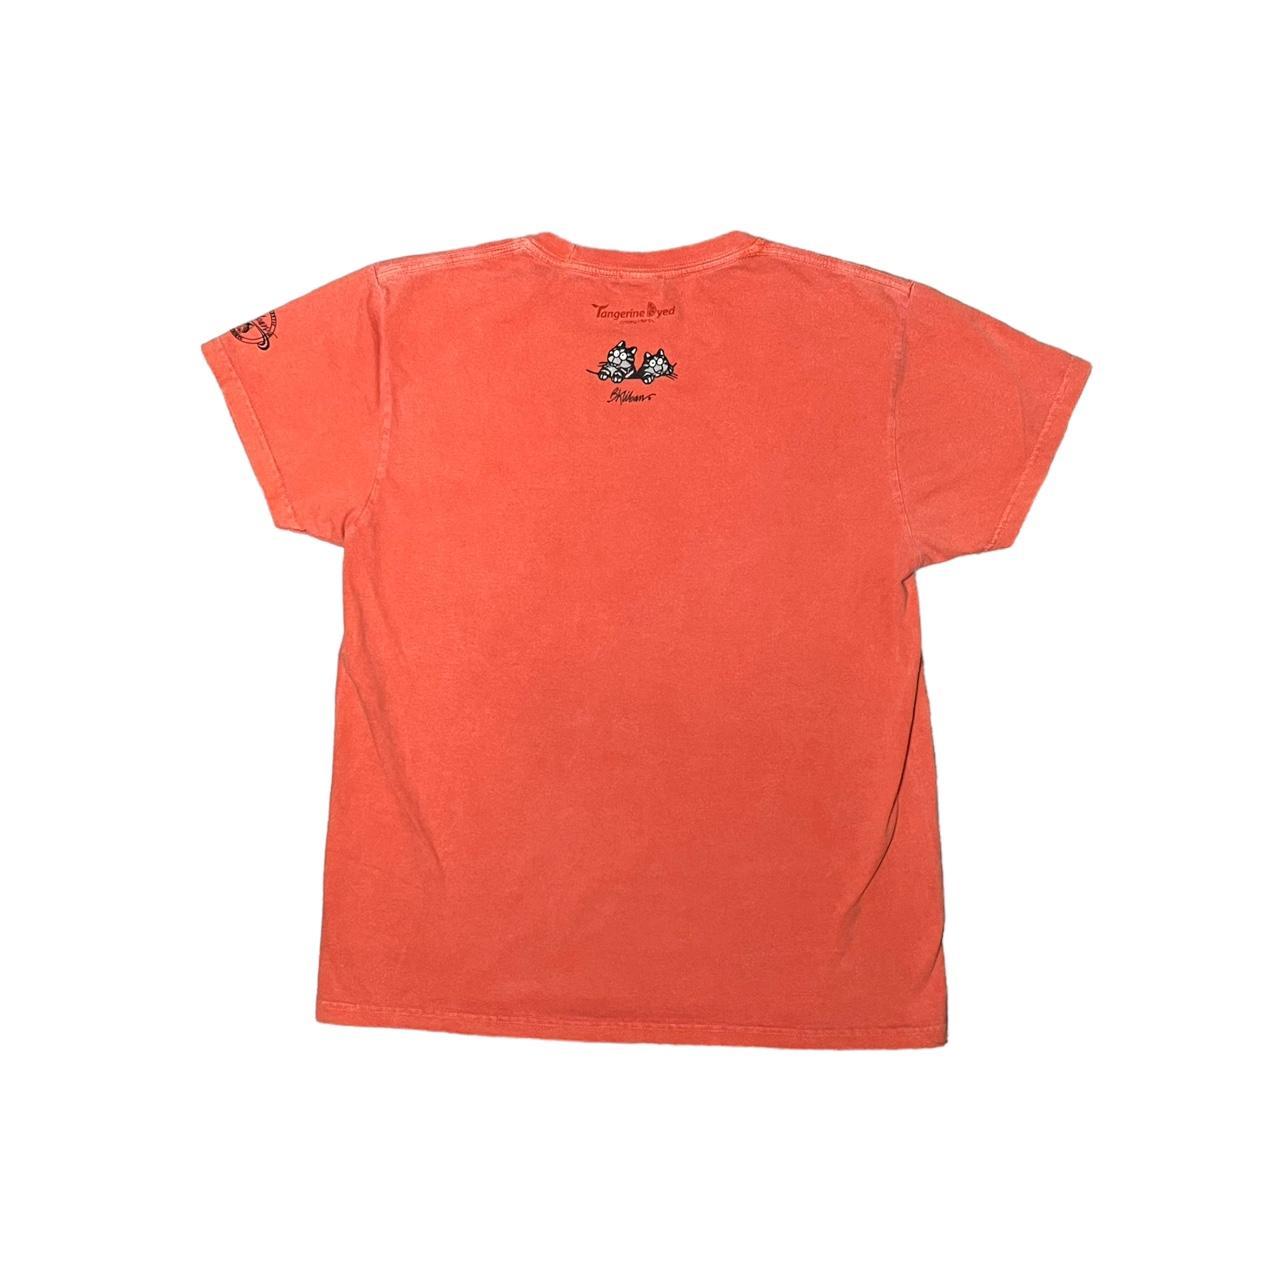 Crazy Shirts Men's Orange T-shirt | Depop